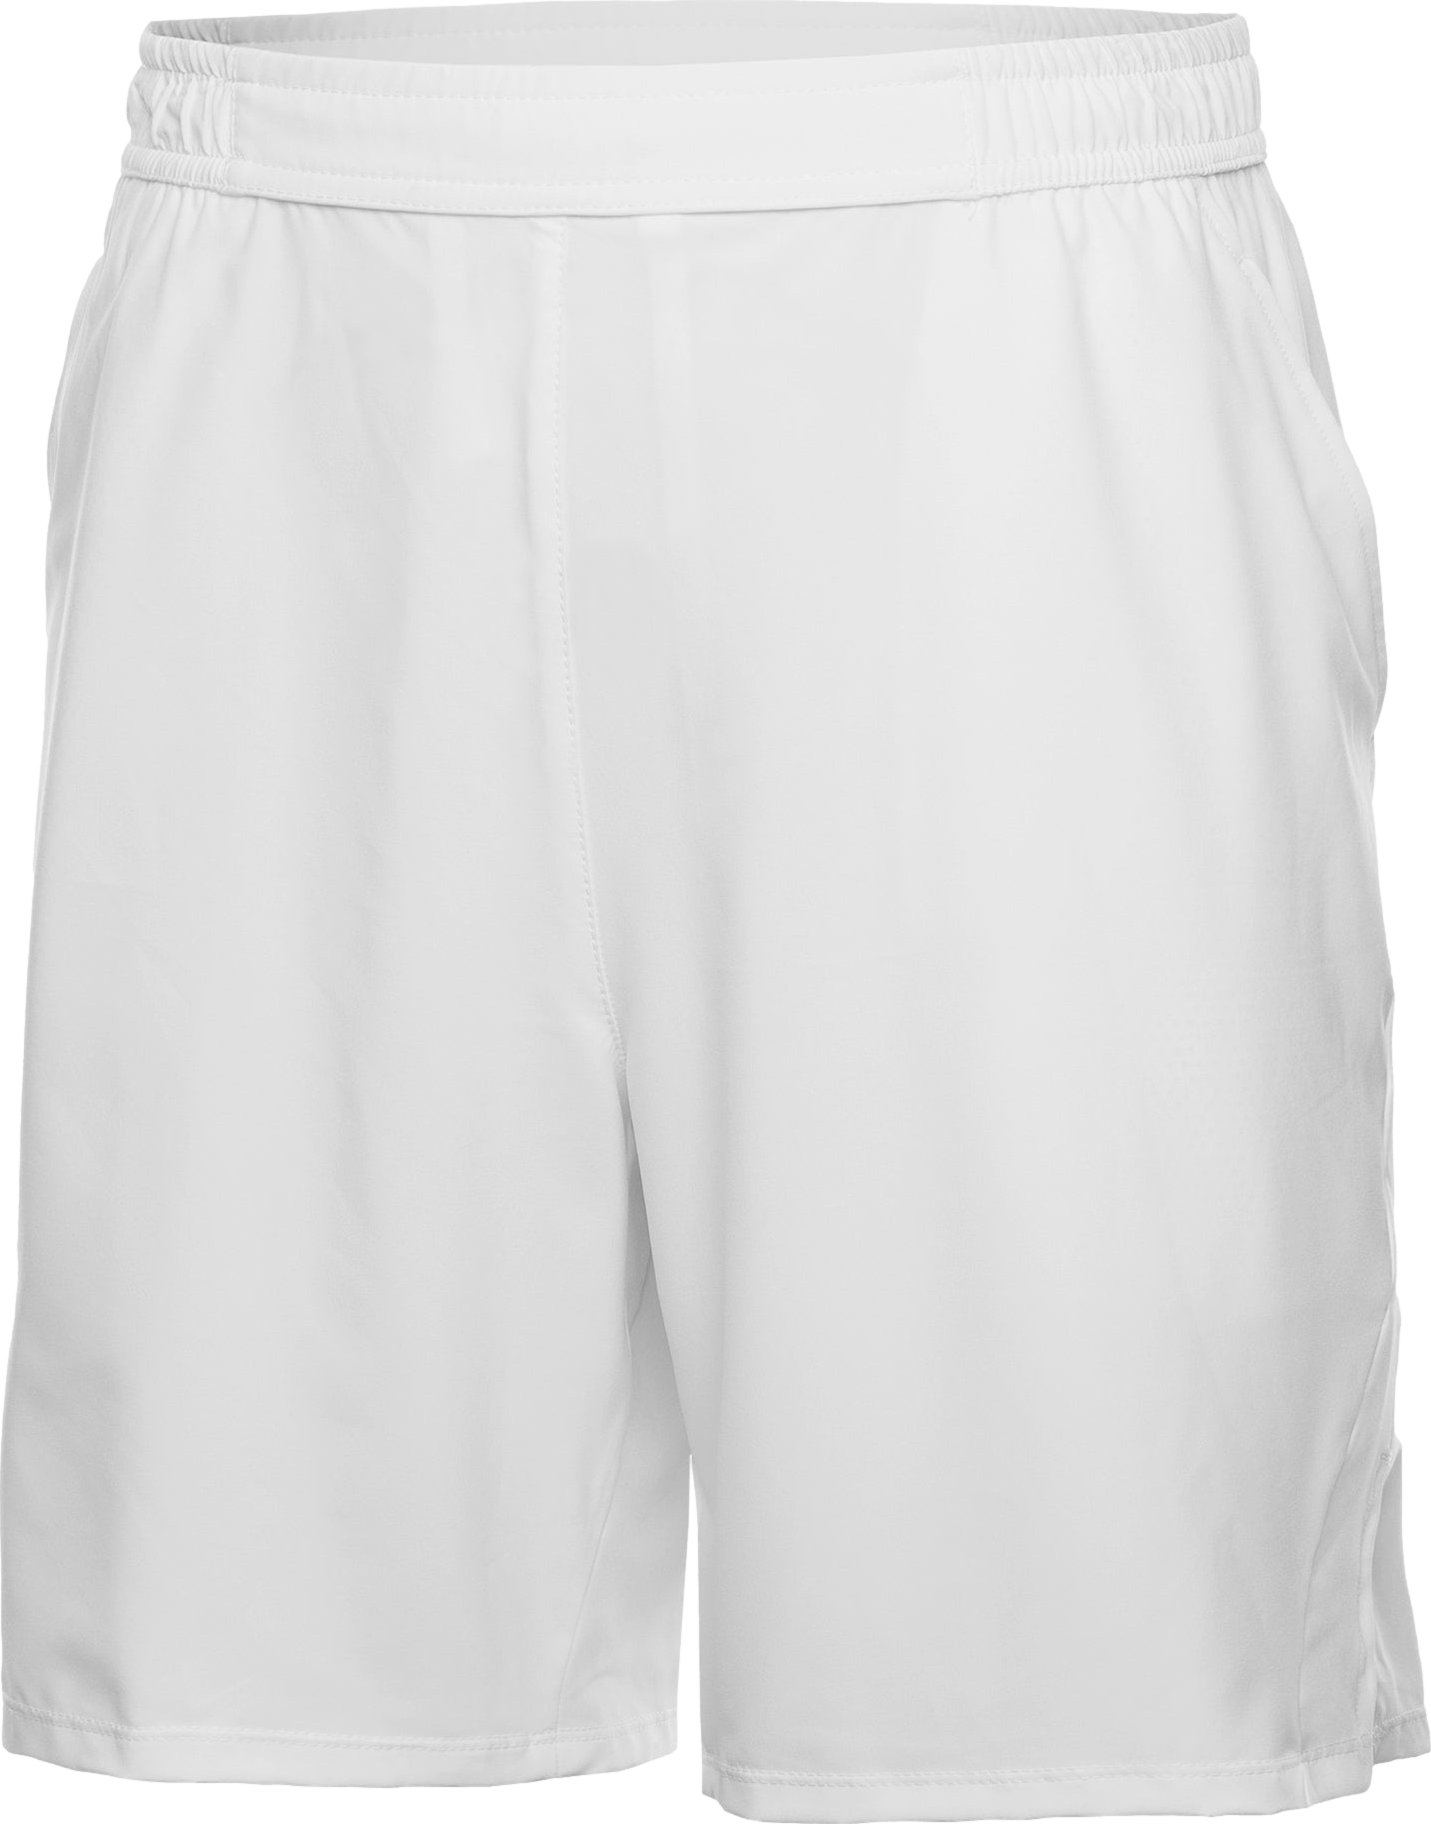 K-Swiss  Men's Supercharge Tennis Shorts